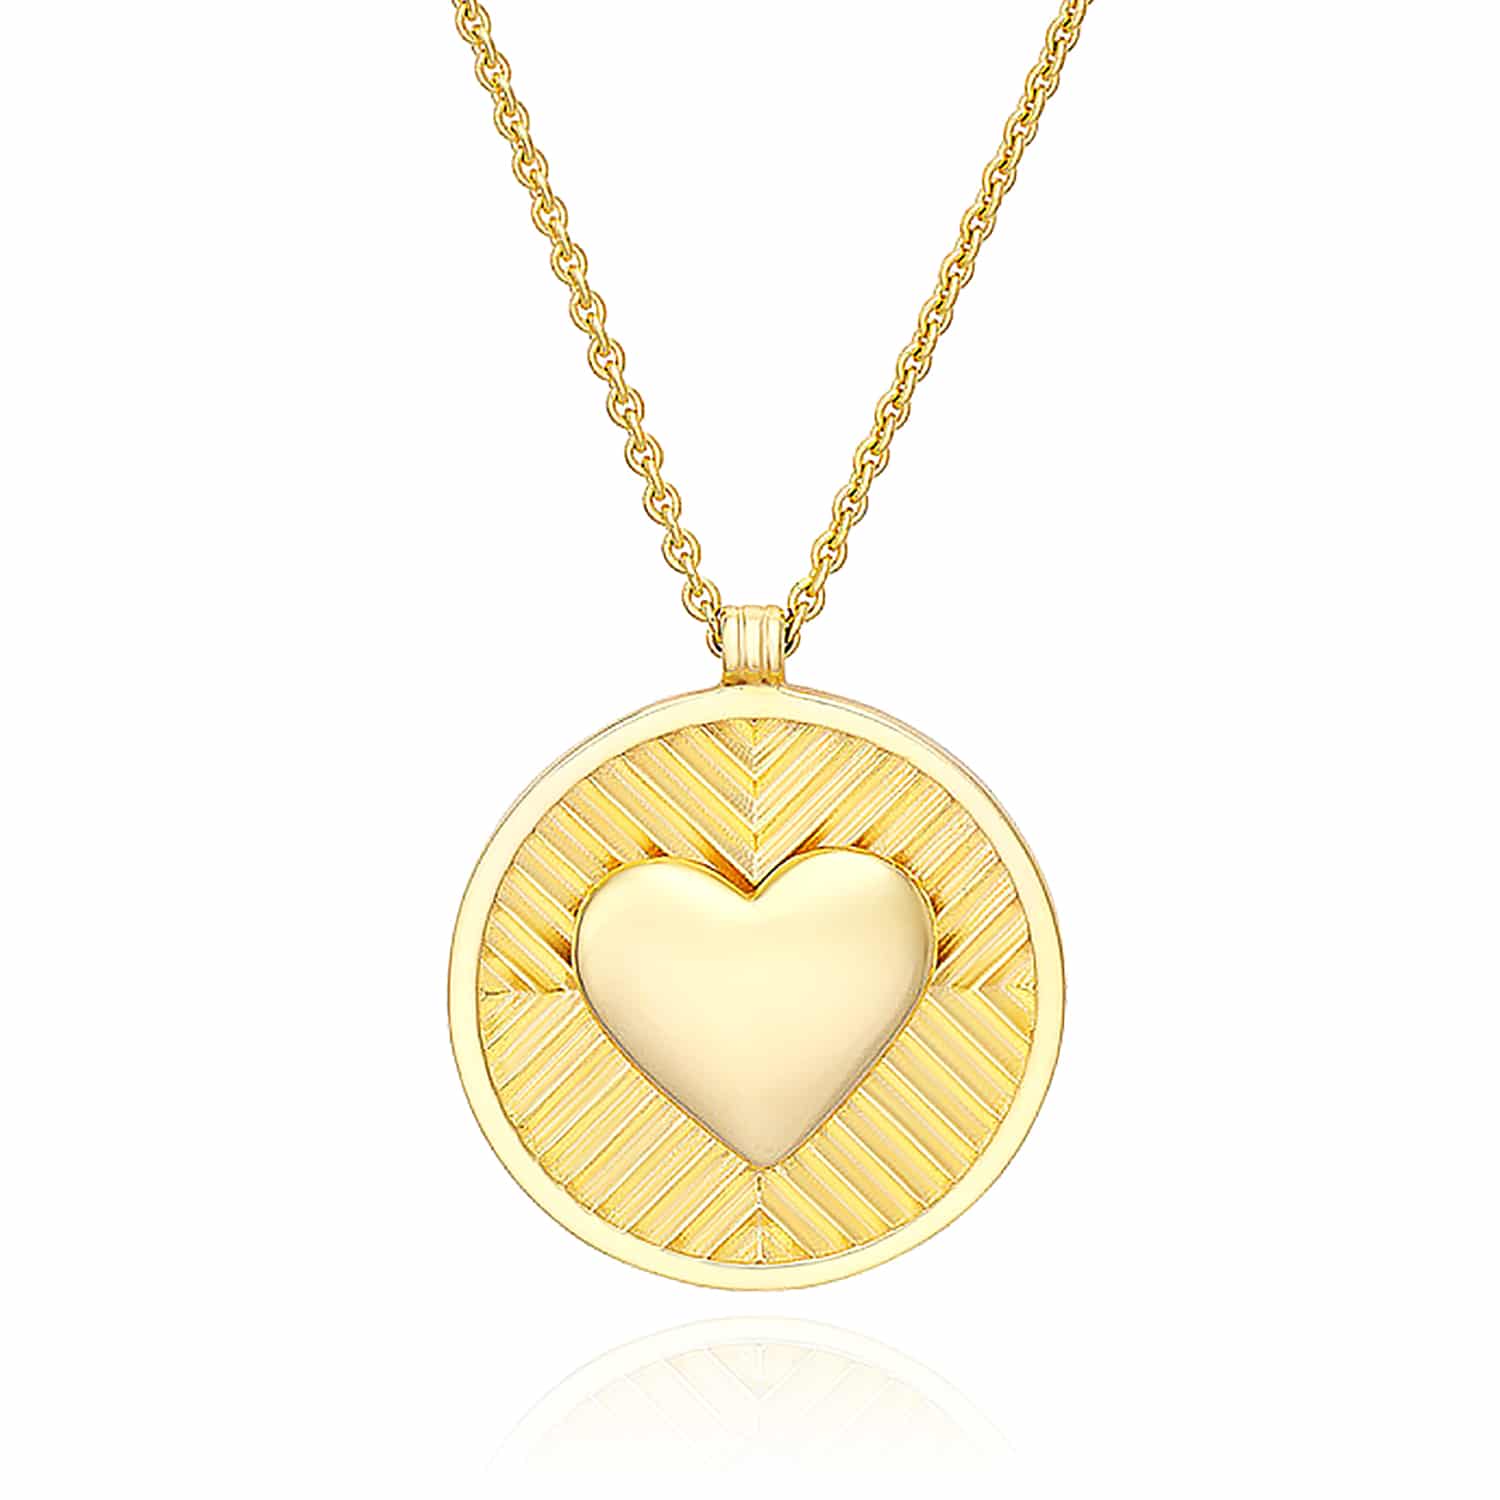 14K Yellow Gold Chevron Heart Round Medallion Pendant Necklace 16-18" Adjustable